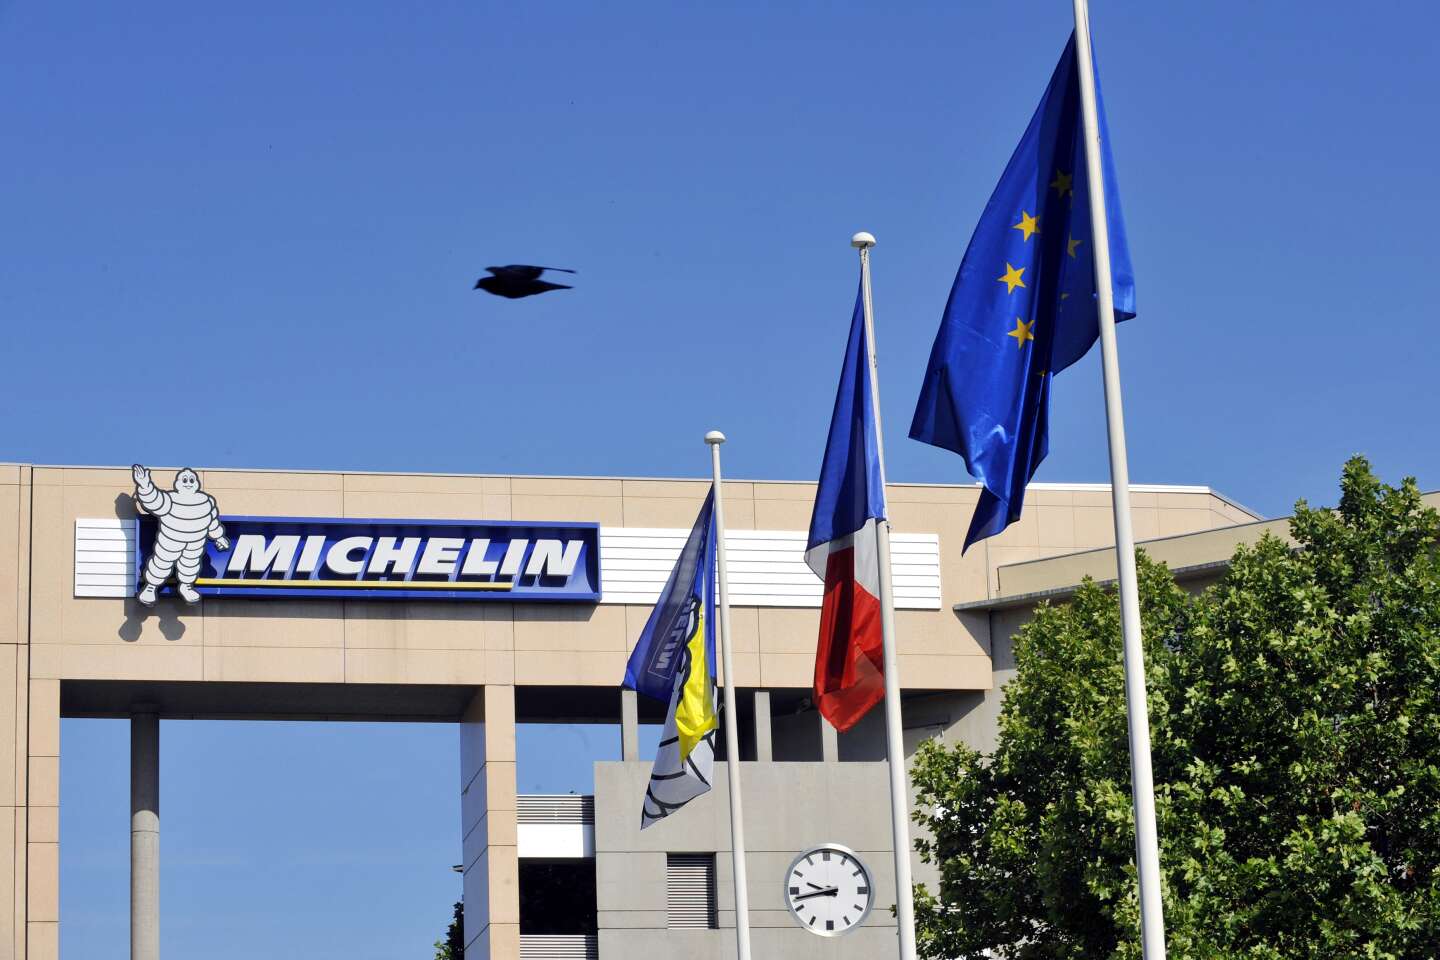 Michelin: redéploiement des effectifs en Europe